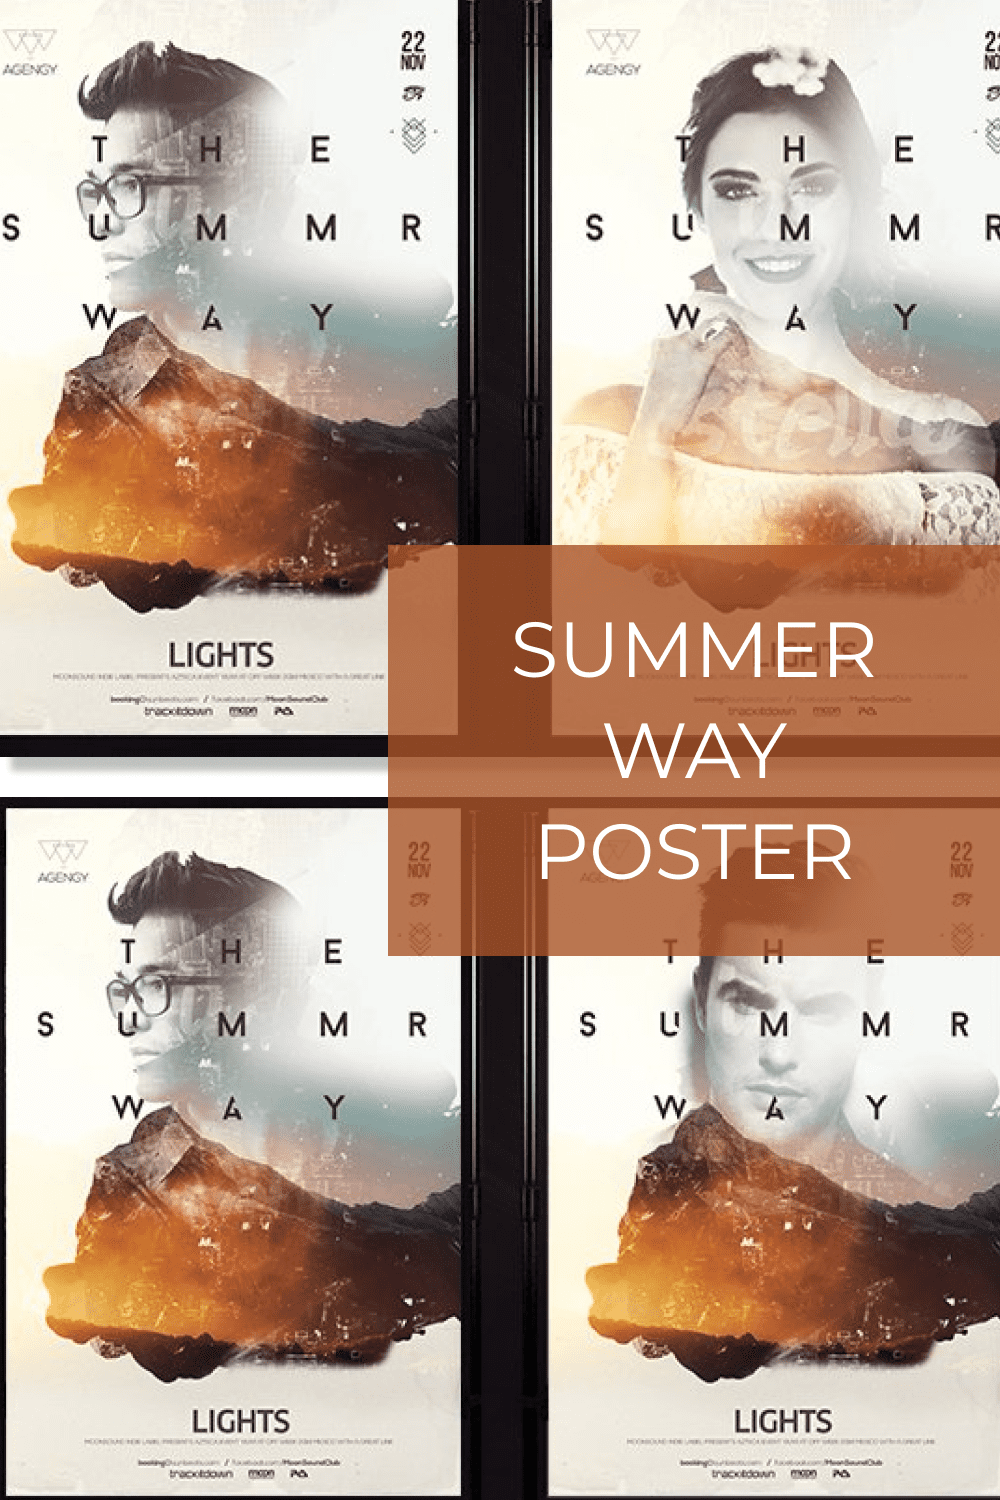 Summer Way Poster pinterest image.